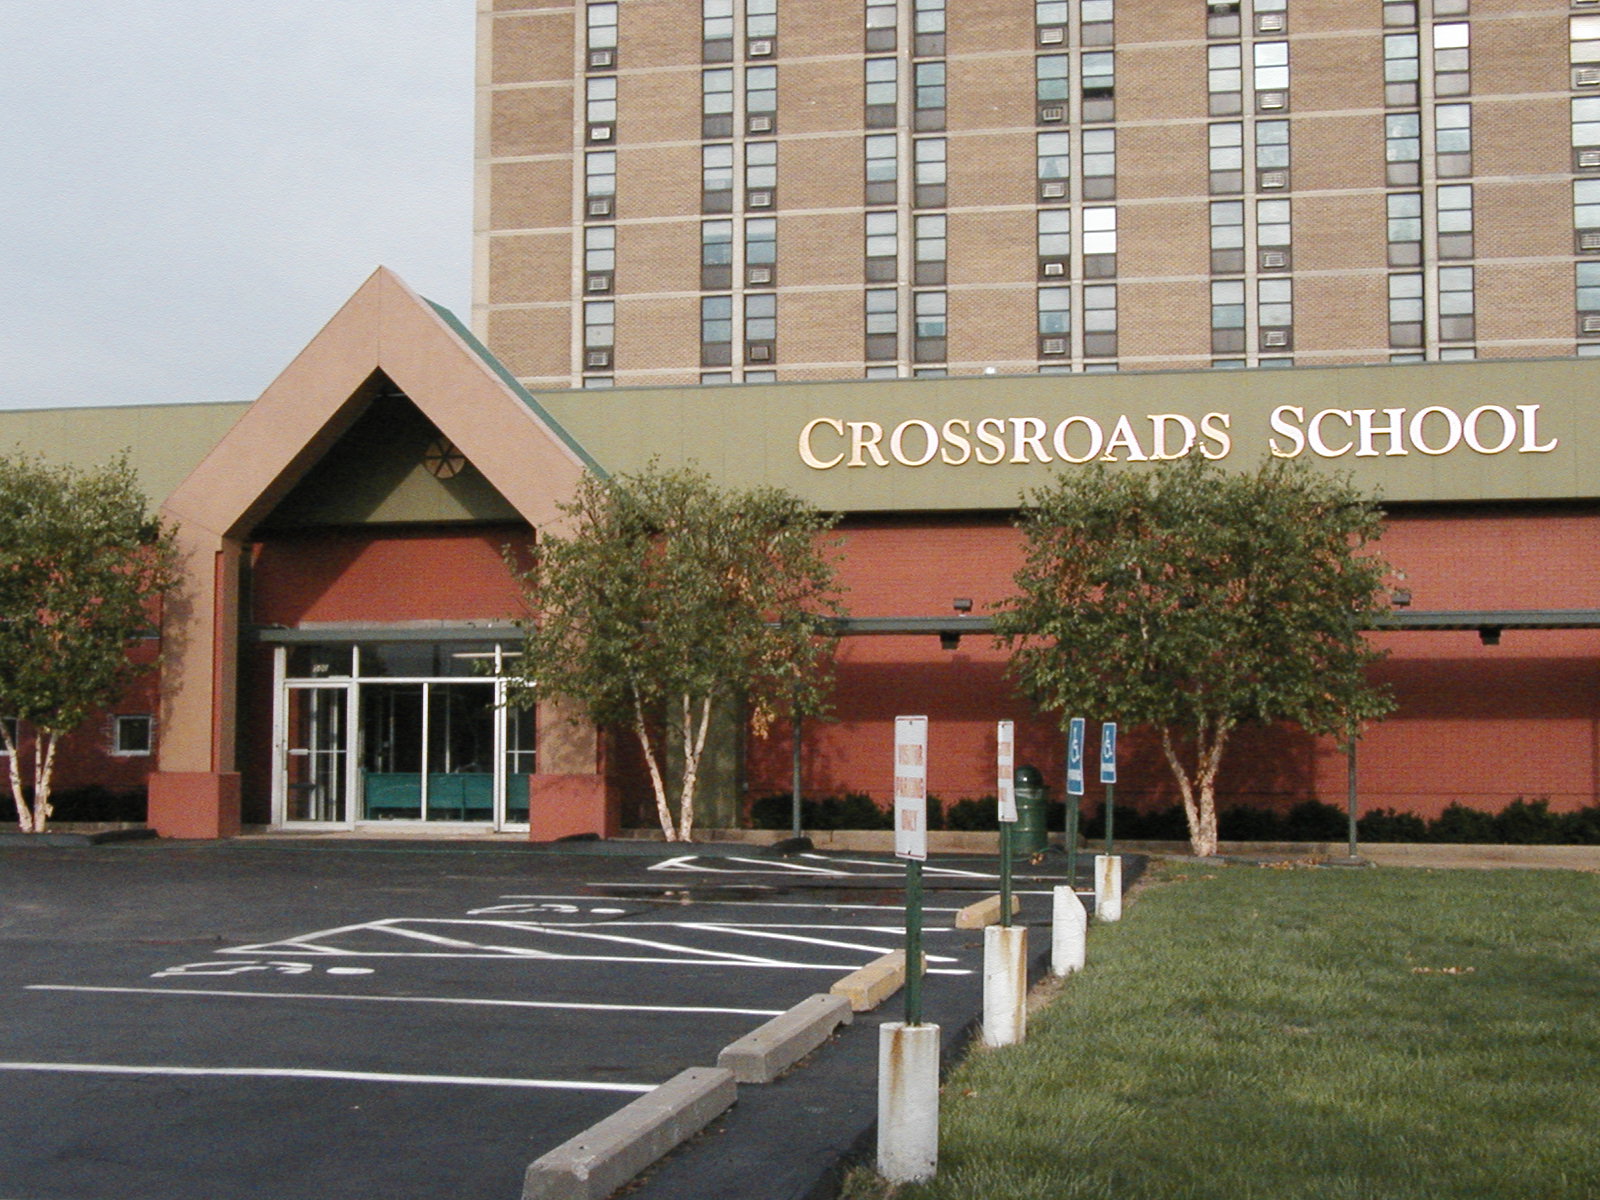 Crossroads School circa 1998